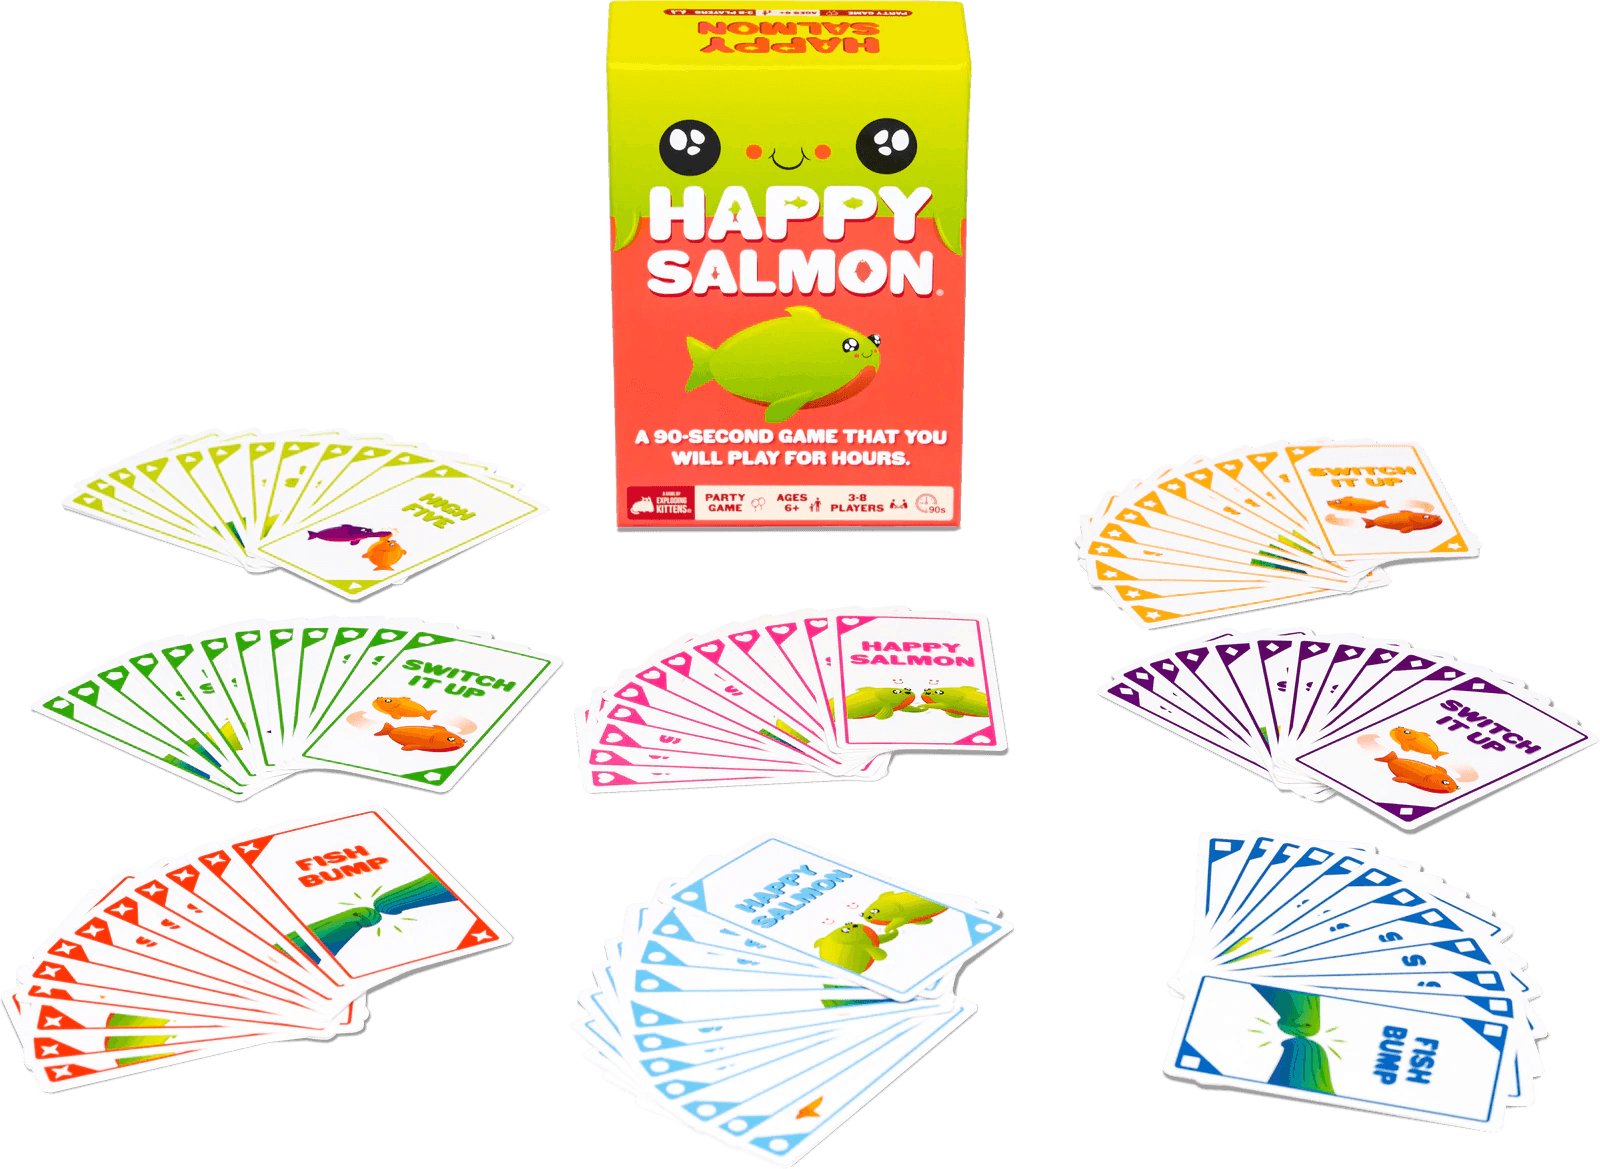 Happy Salmon Box Edition - Gaming Library